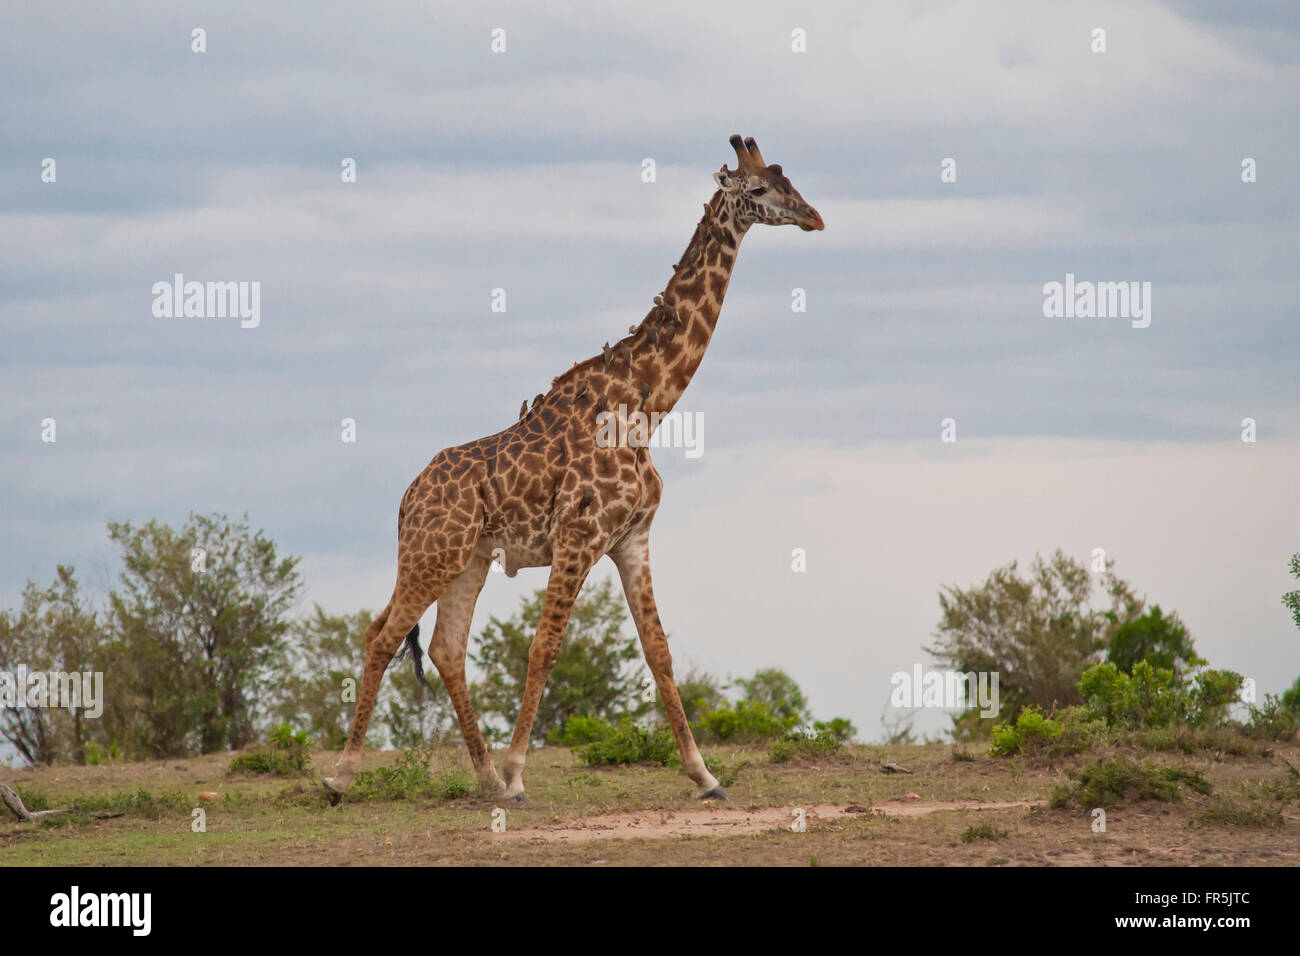 Giraffe standing in the Amboseli National Park in Kenya Stock Photo